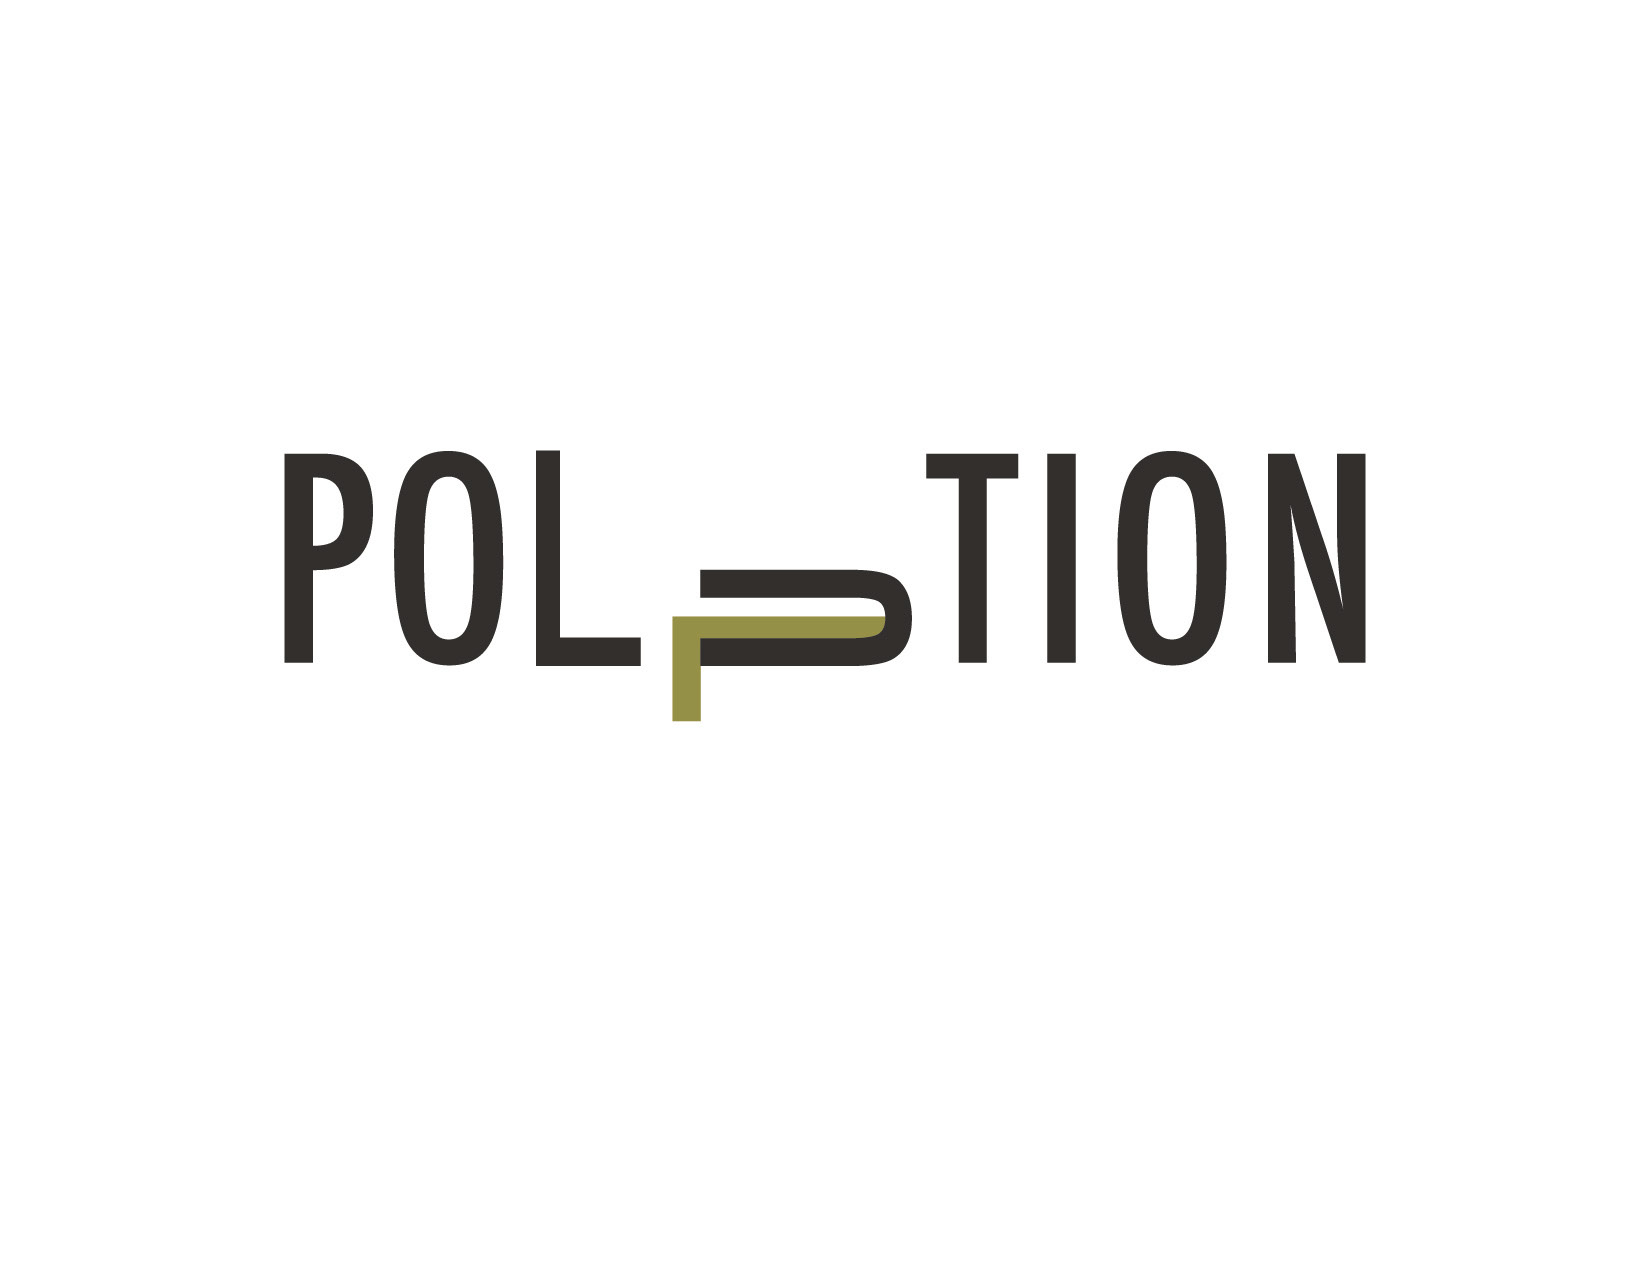 typogram-polution_opt